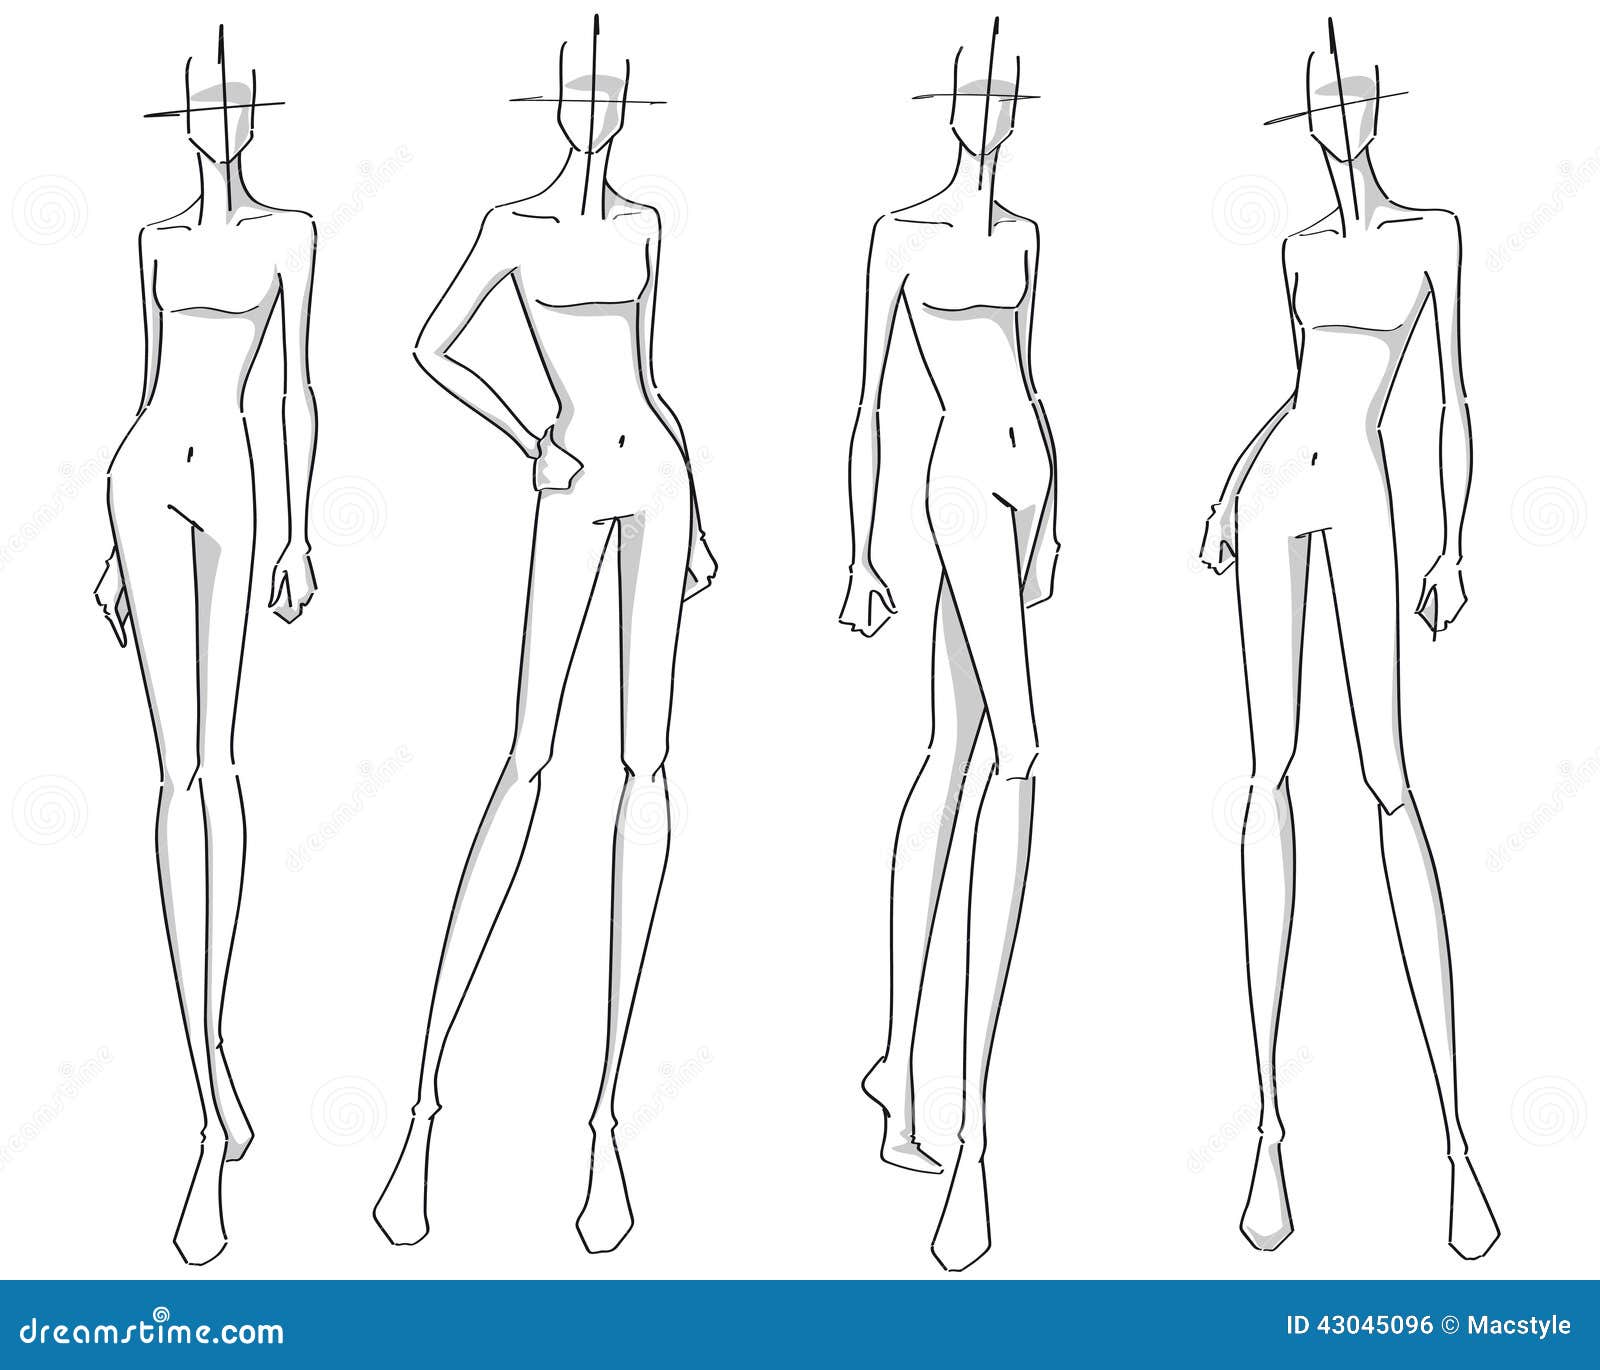 HOW TO DRAW FASHION POSES- fashion illustration tutorial - YouTube